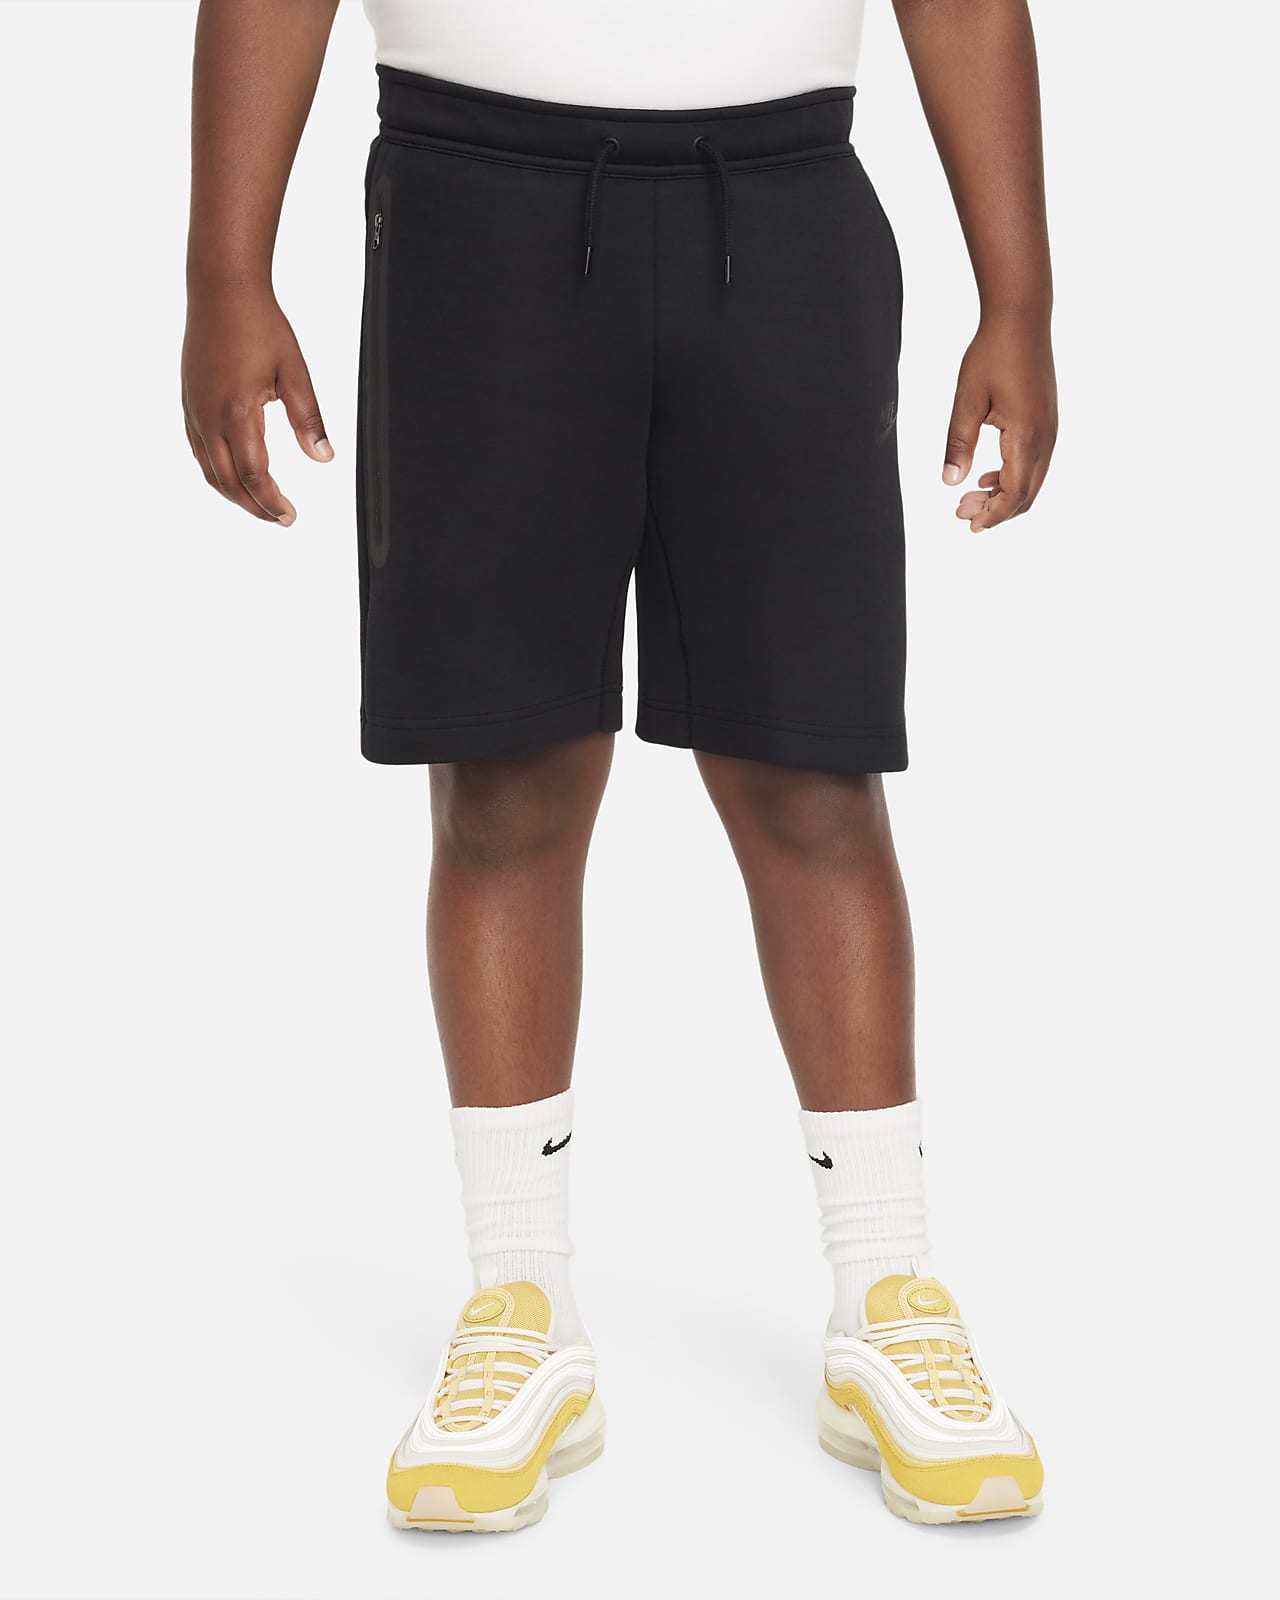 Shorts para niño talla grande (talla amplia) Nike Sportswear Tech Fleece